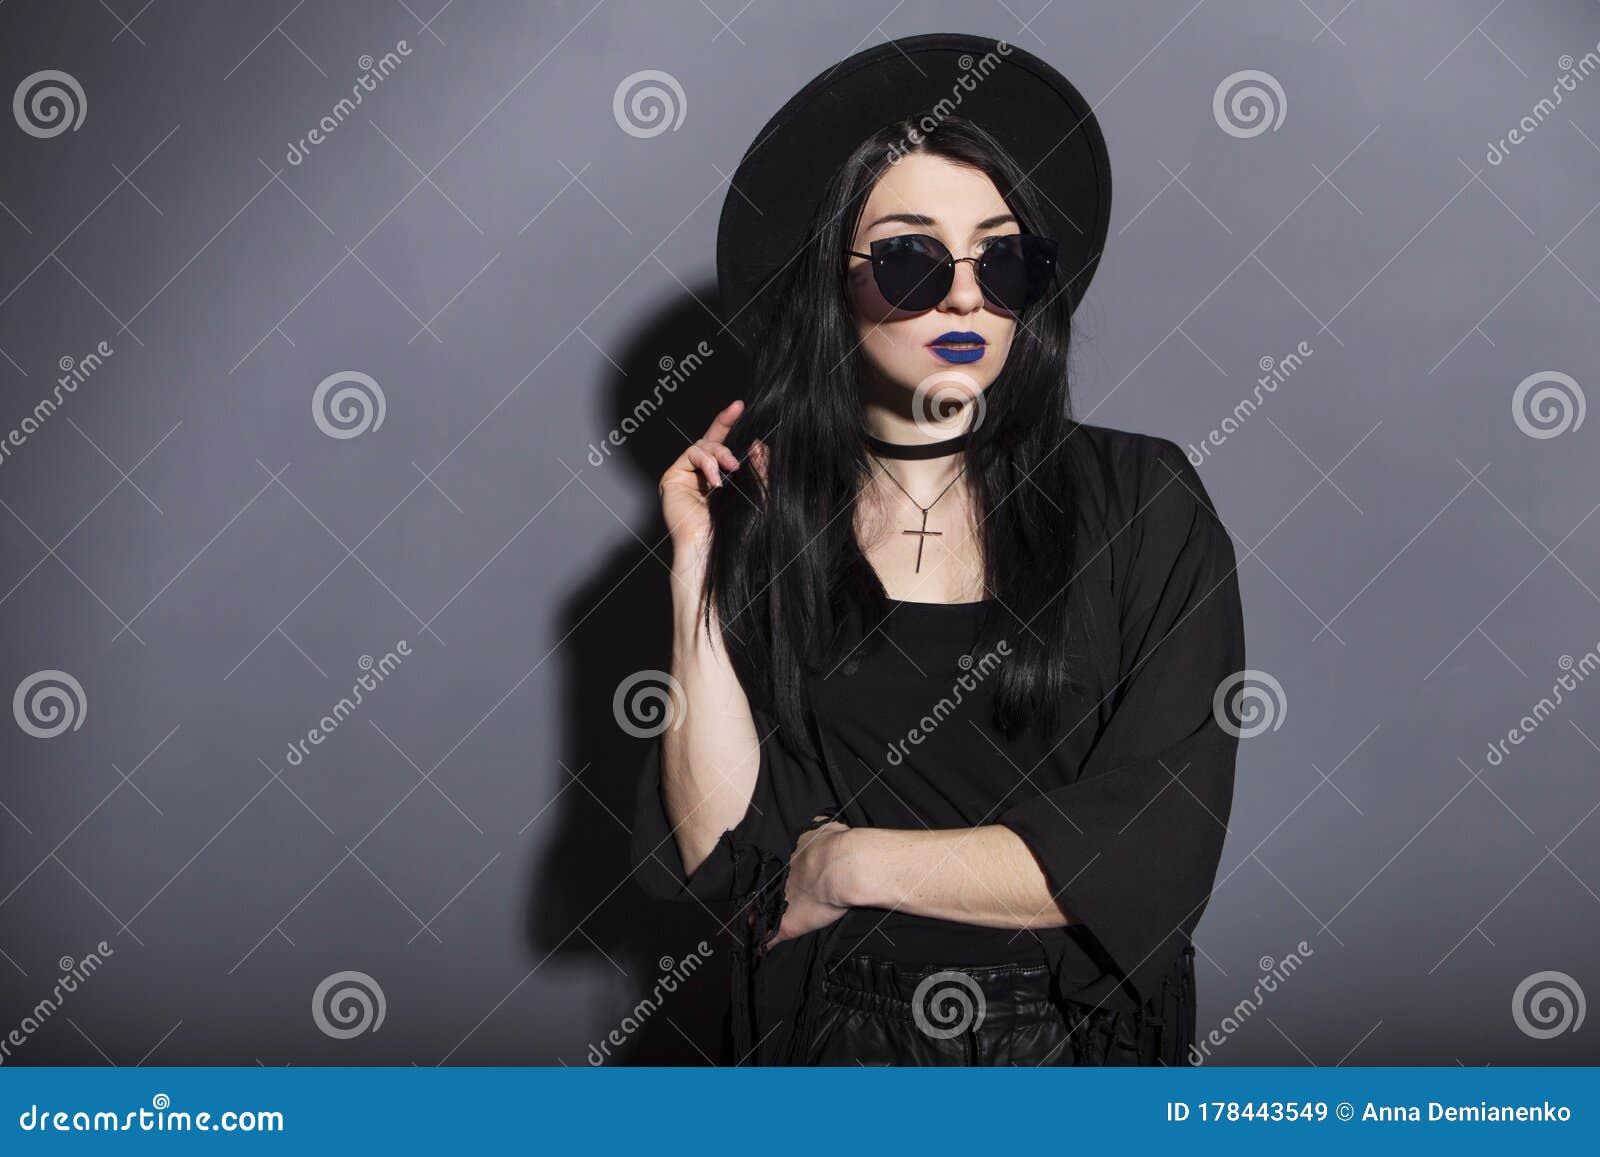 Gothic Caucasian Woman in Dark Dress on a Grey Neutral Background ...